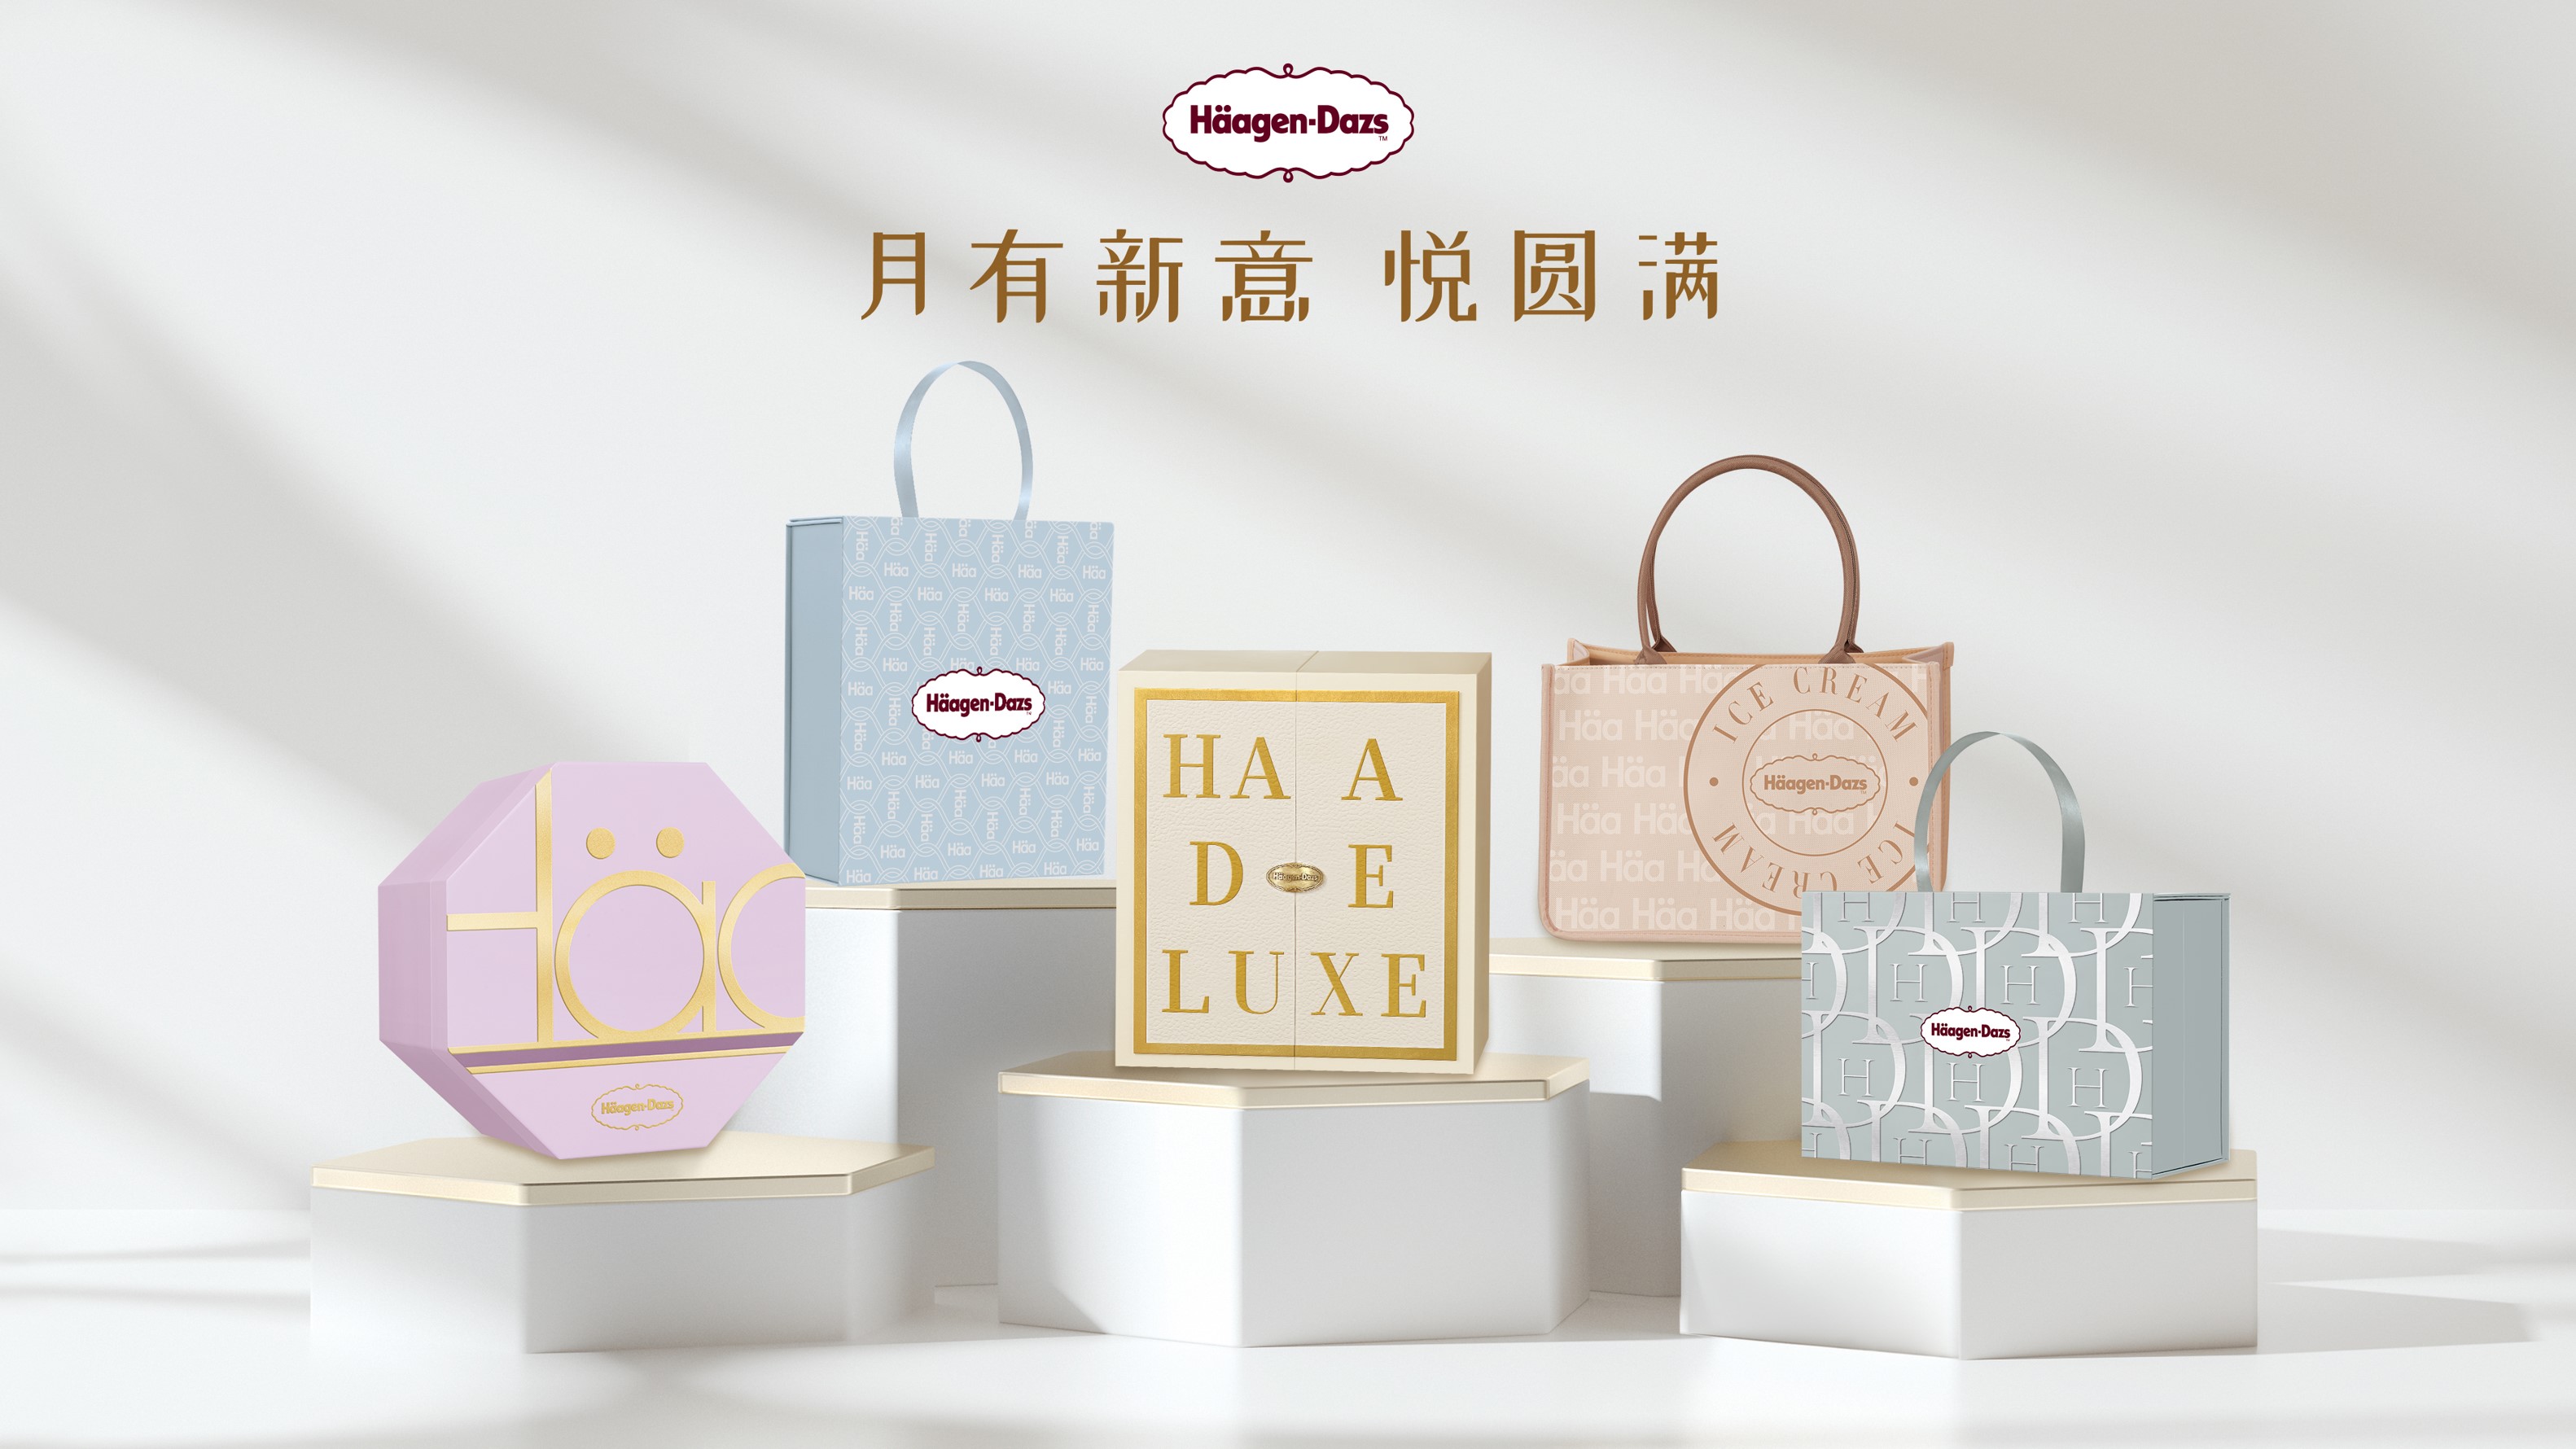 Haagen-Dazs luxury packaging